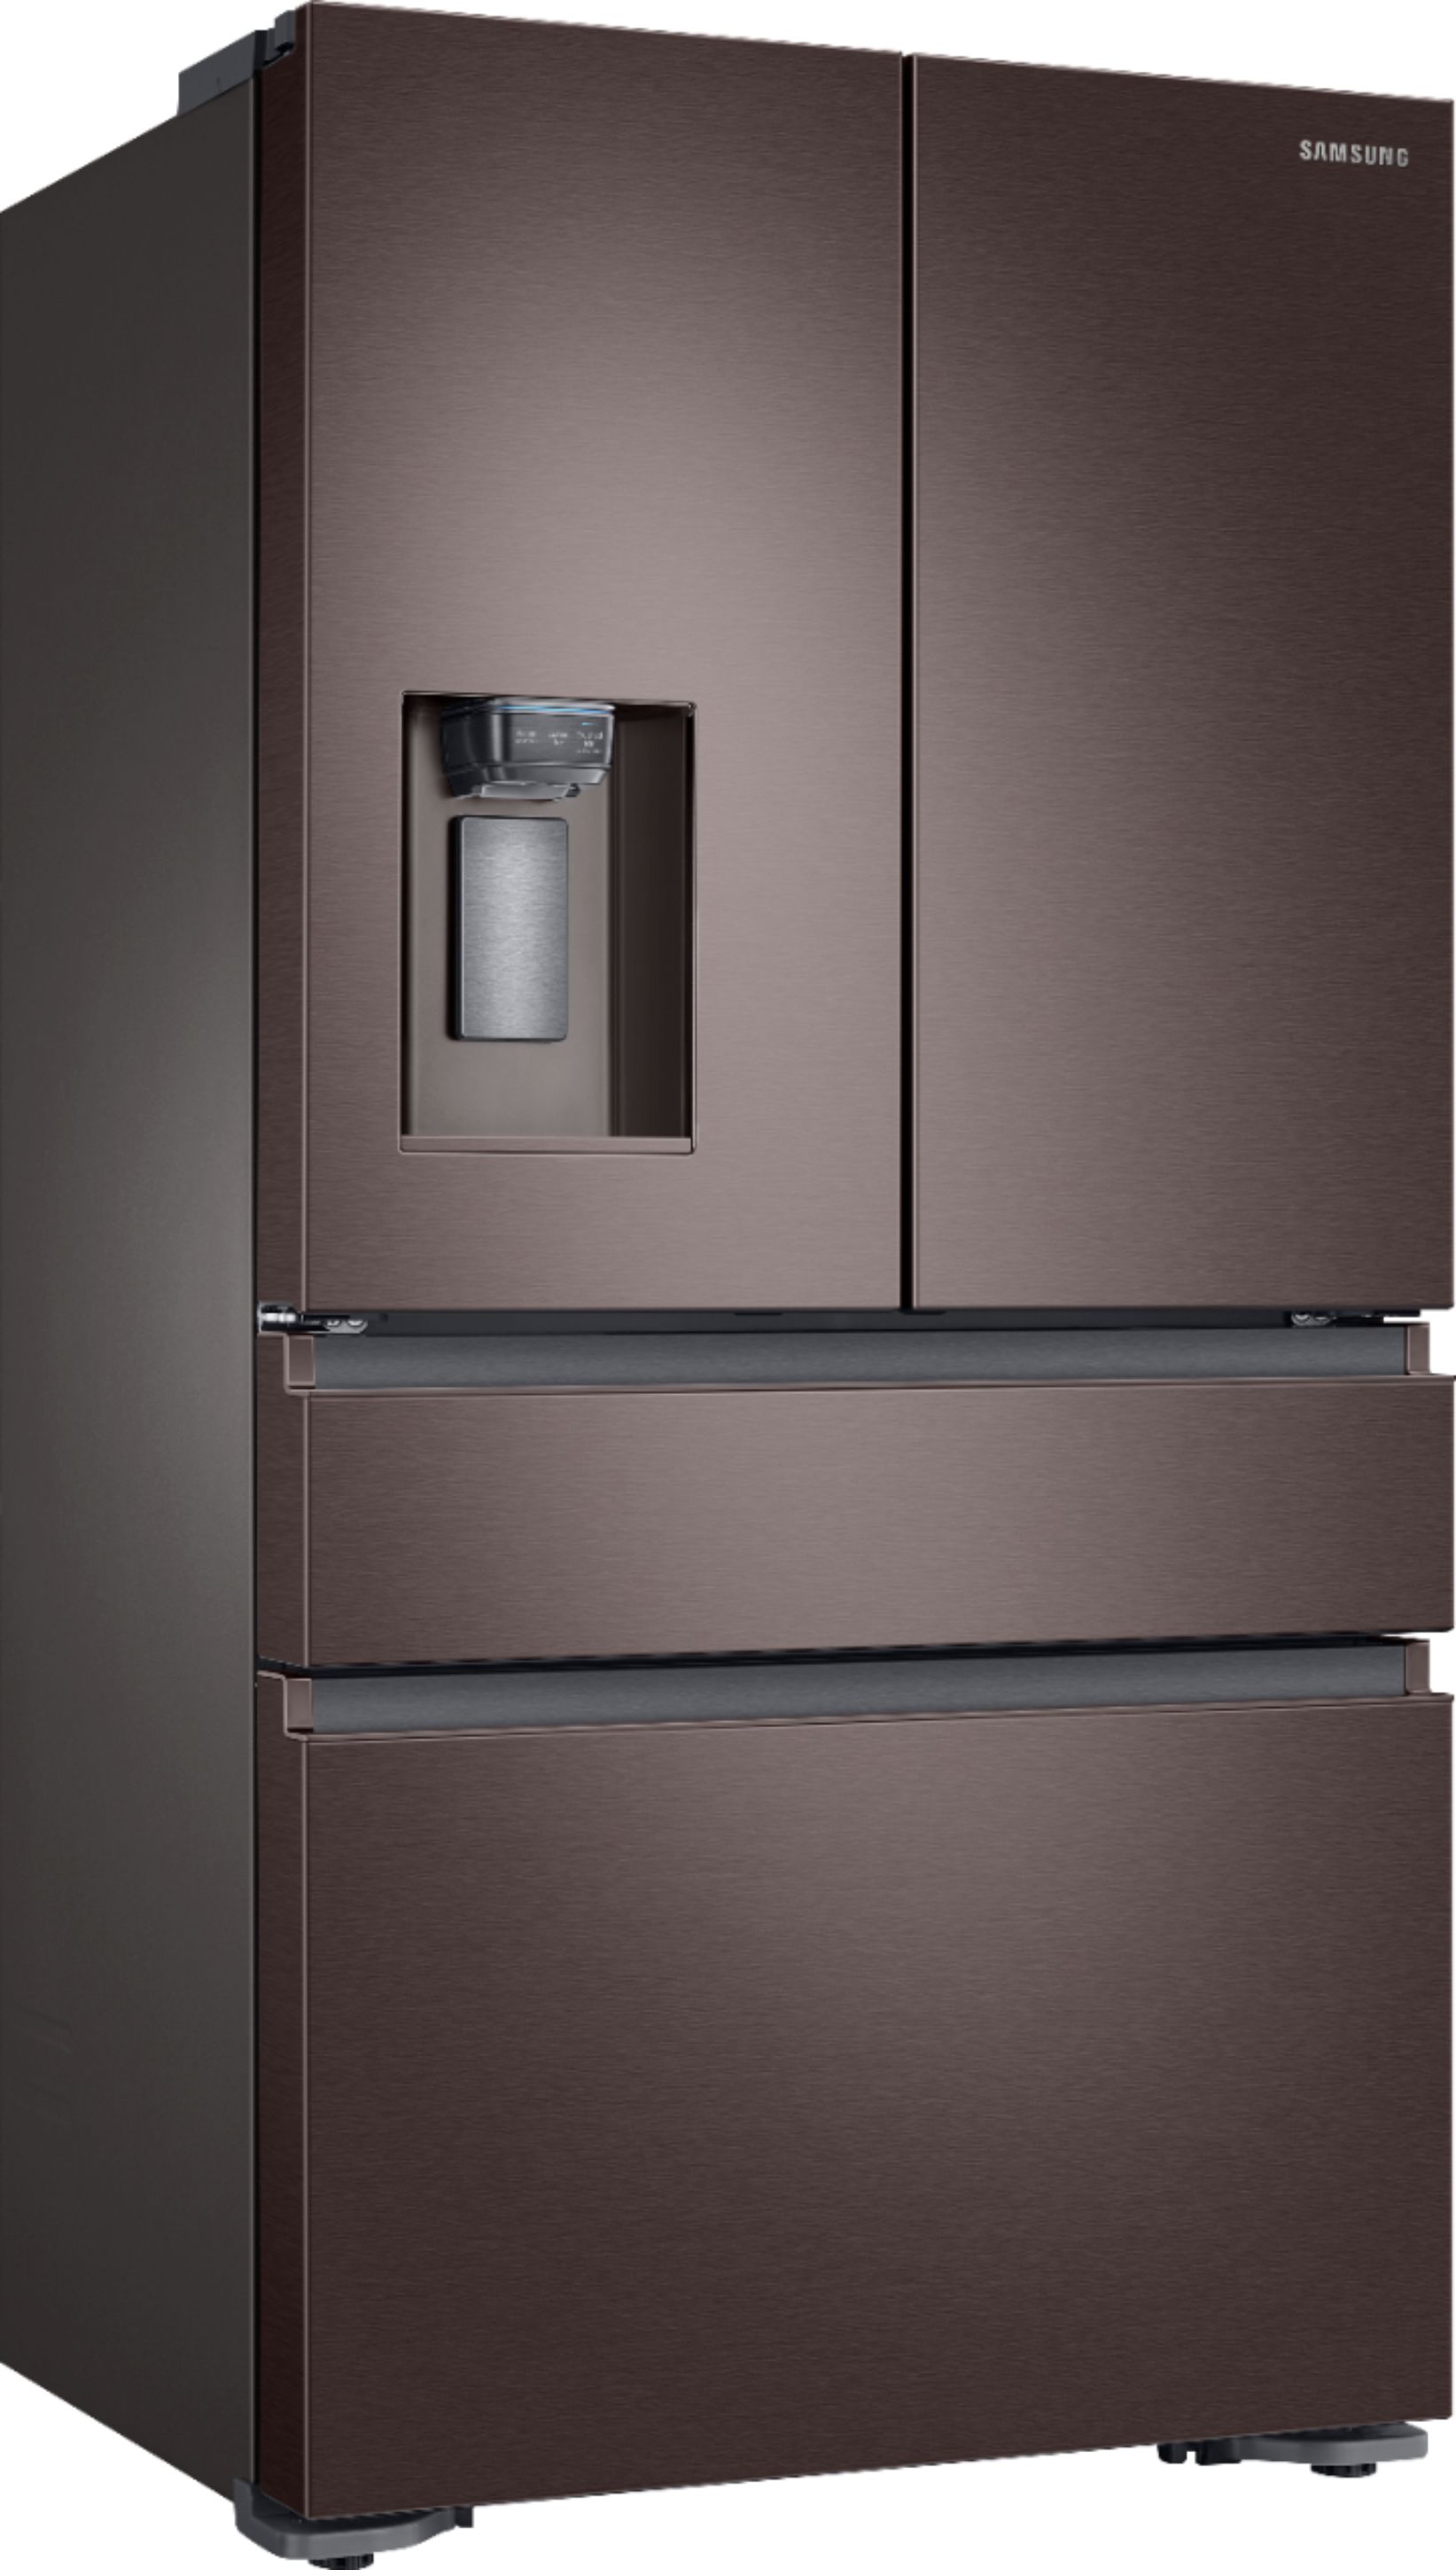 Angle View: Samsung - 22.6 Cu. Ft. 4-Door Flex French Door Counter-Depth Refrigerator - Tuscan Stainless Steel